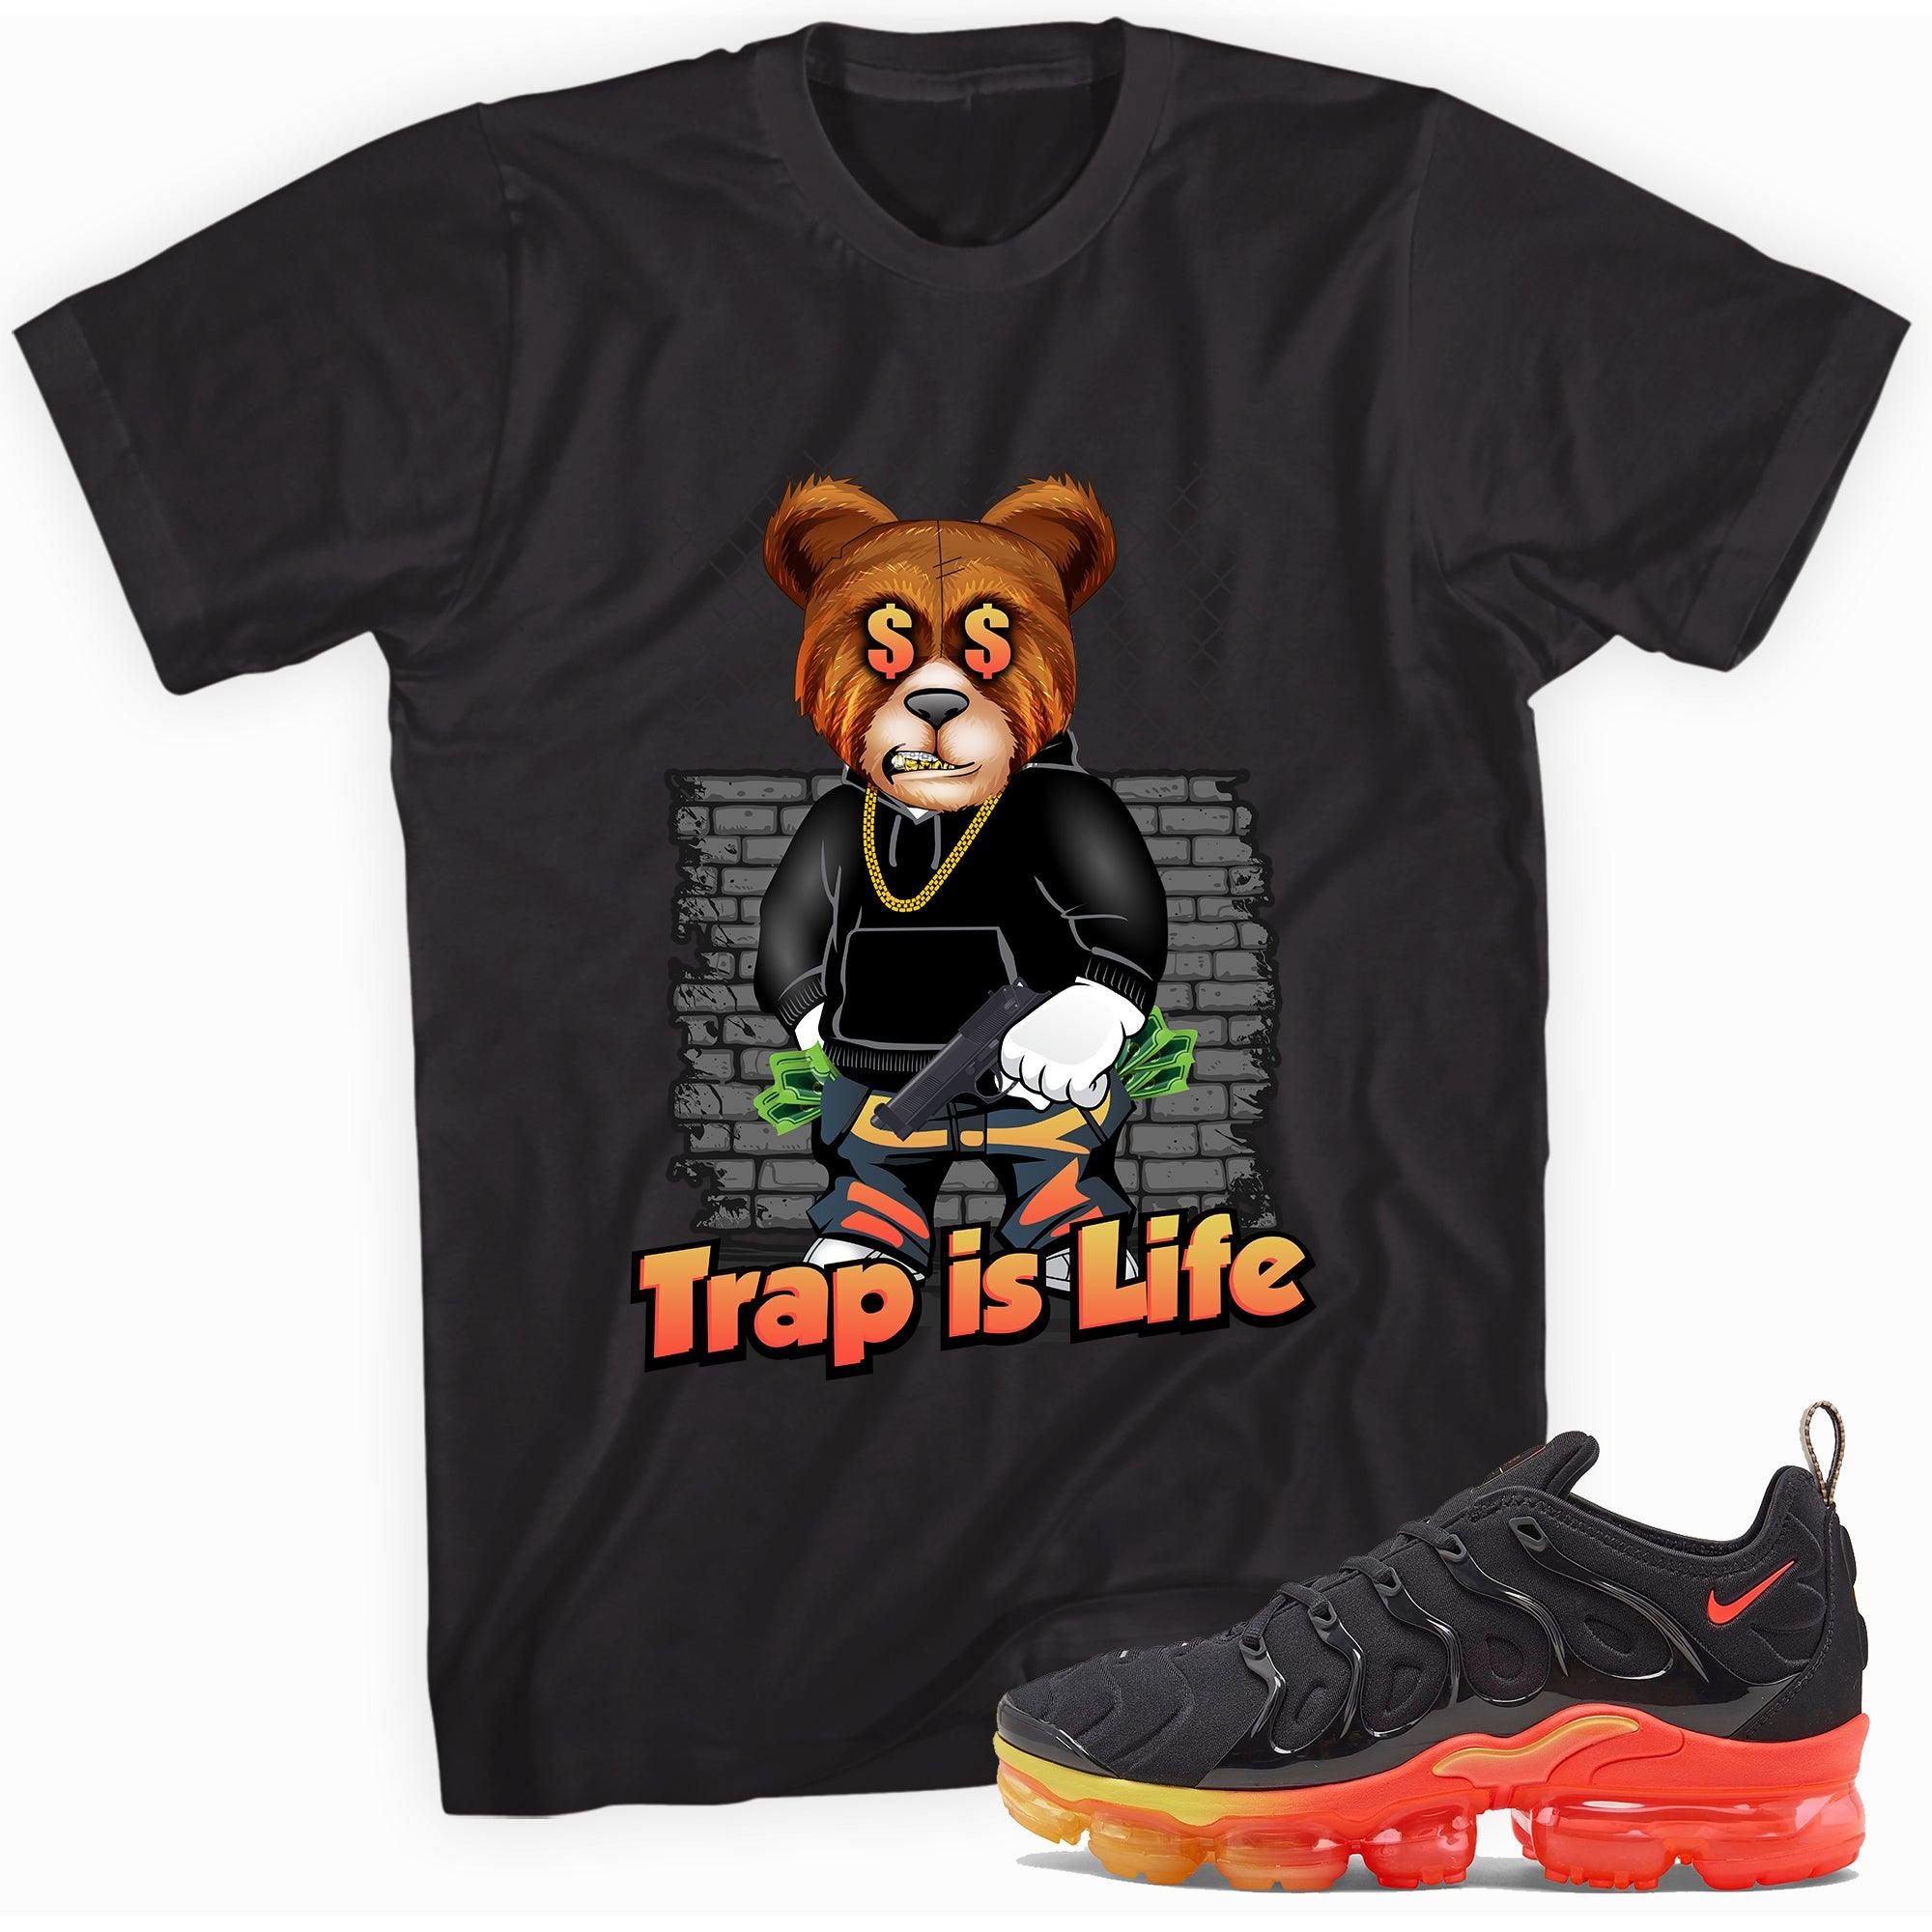 Trap Is Life Shirt VaporMax Plus Fresh photo